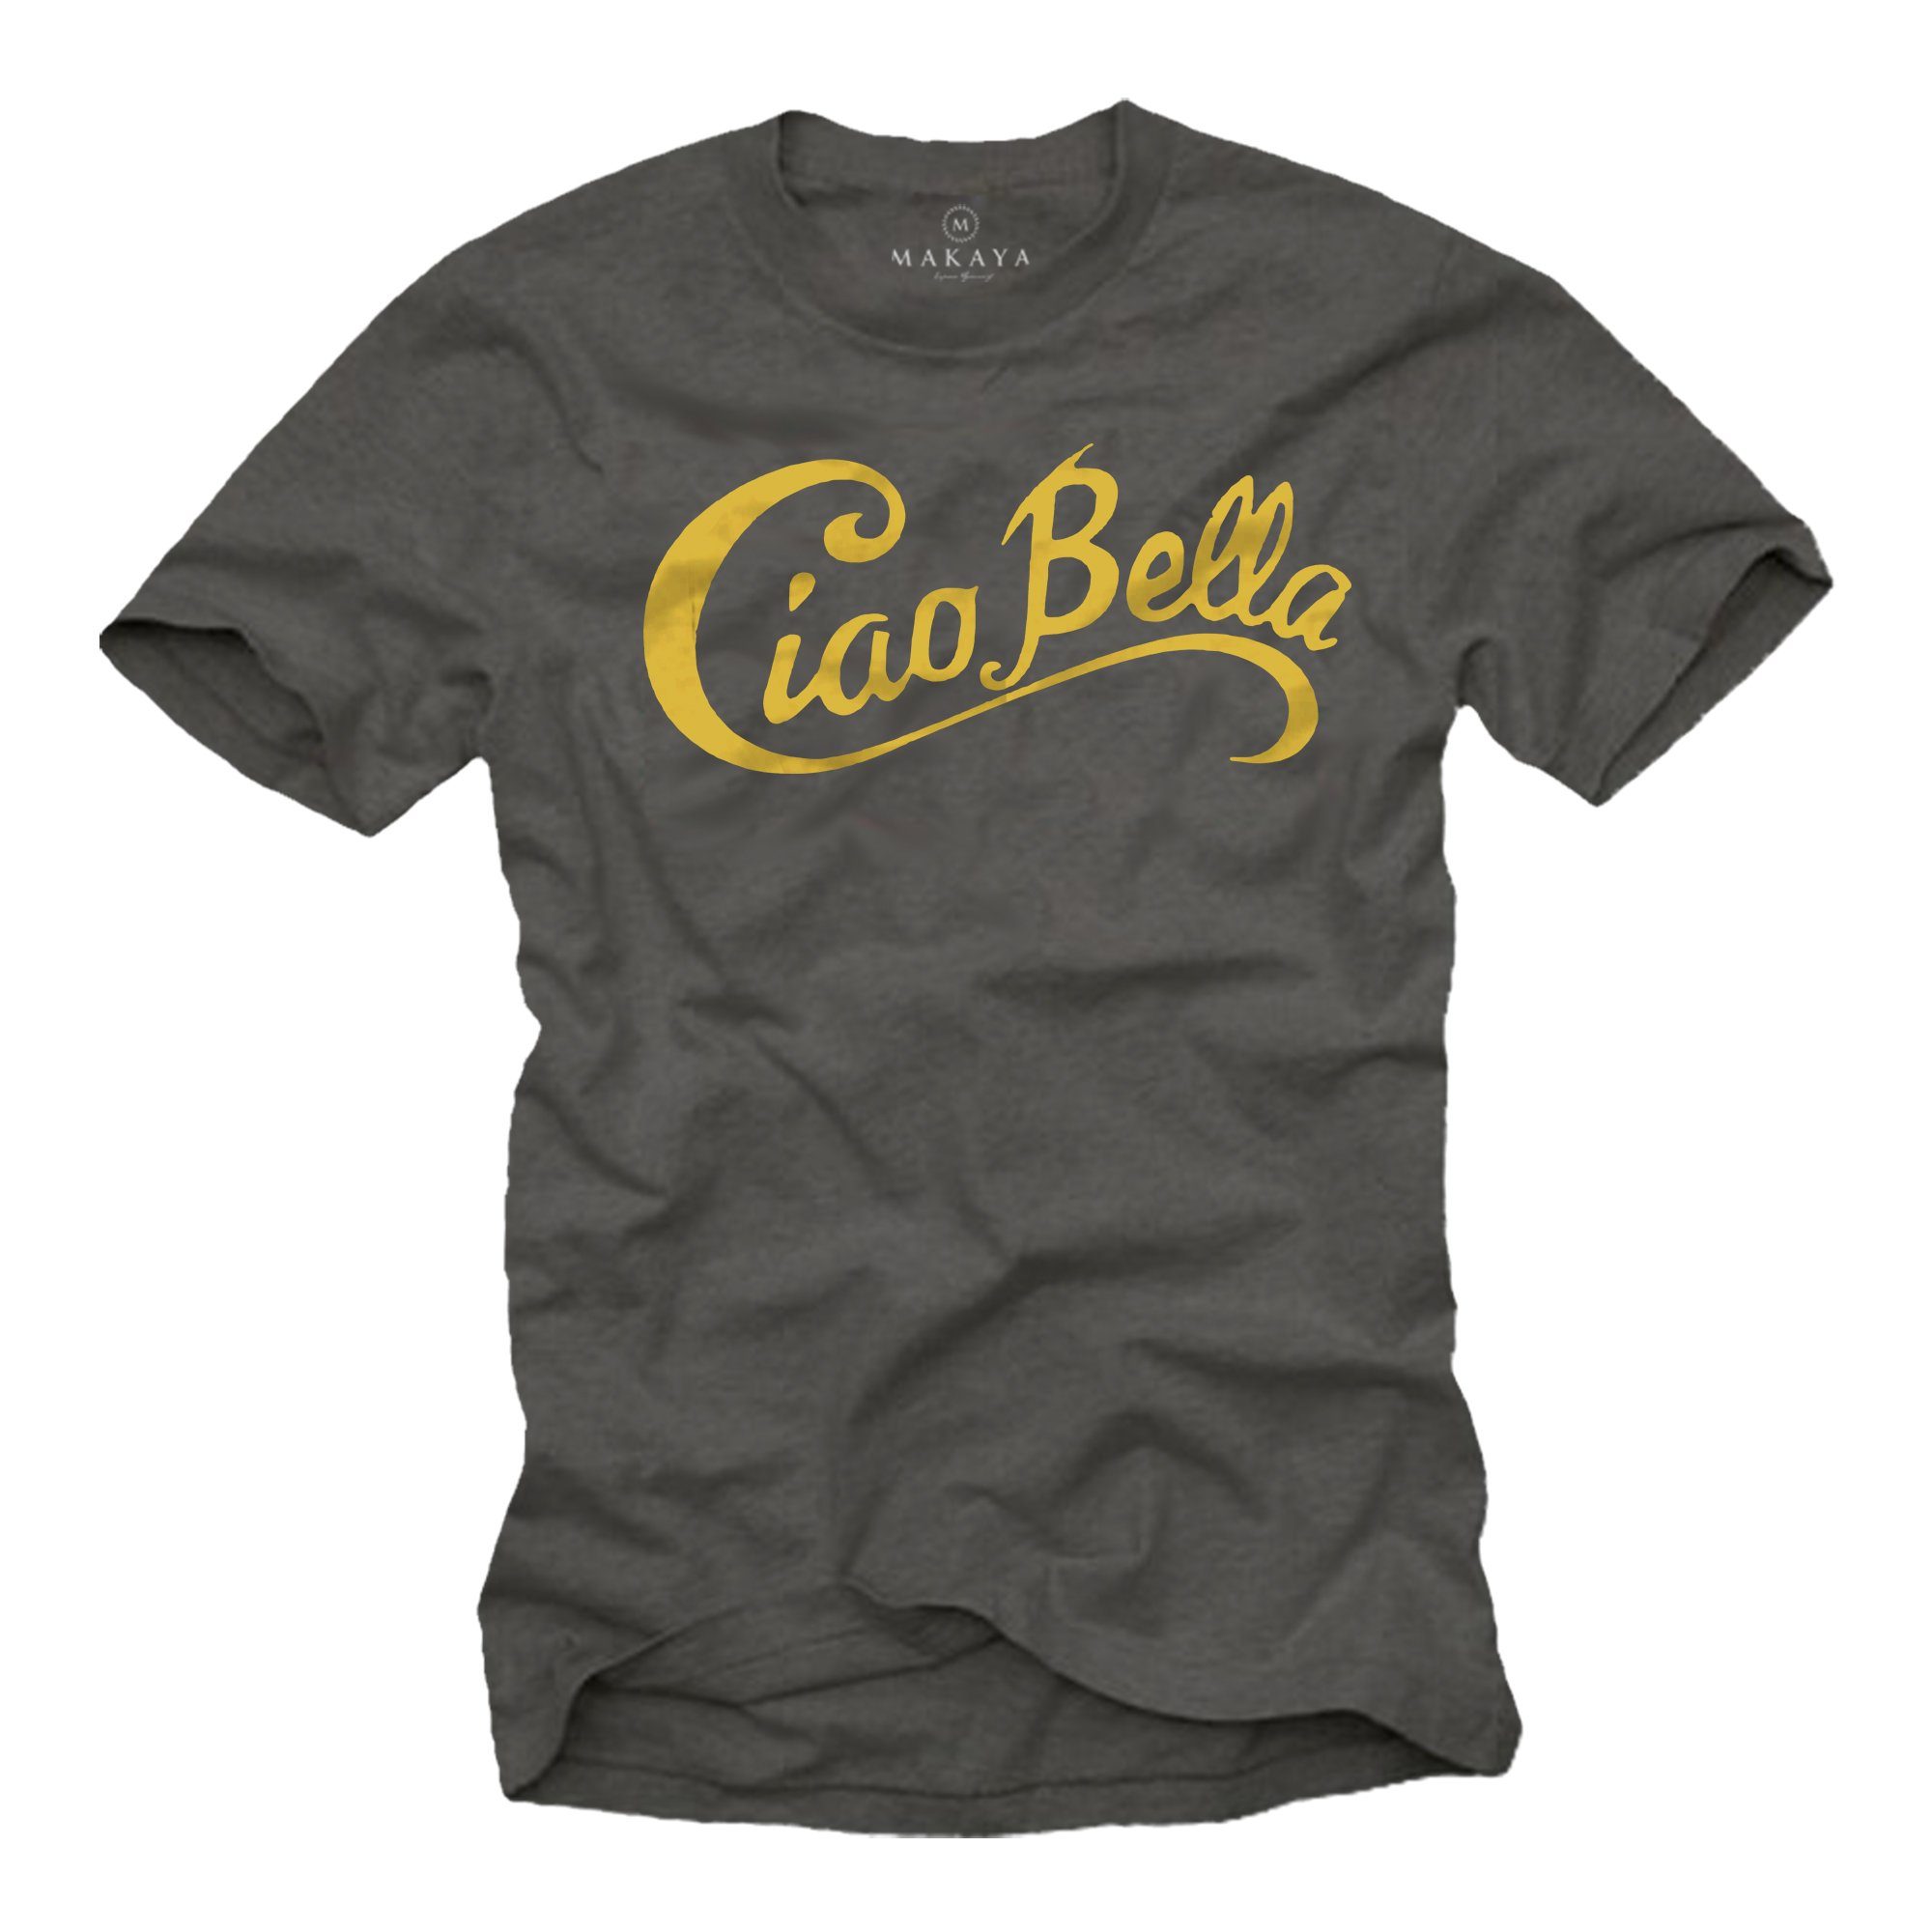 Italienischer Spruch Print-Shirt Mode Motiv Herren Bella Logo, Ciao Style Coole Grau Italien MAKAYA